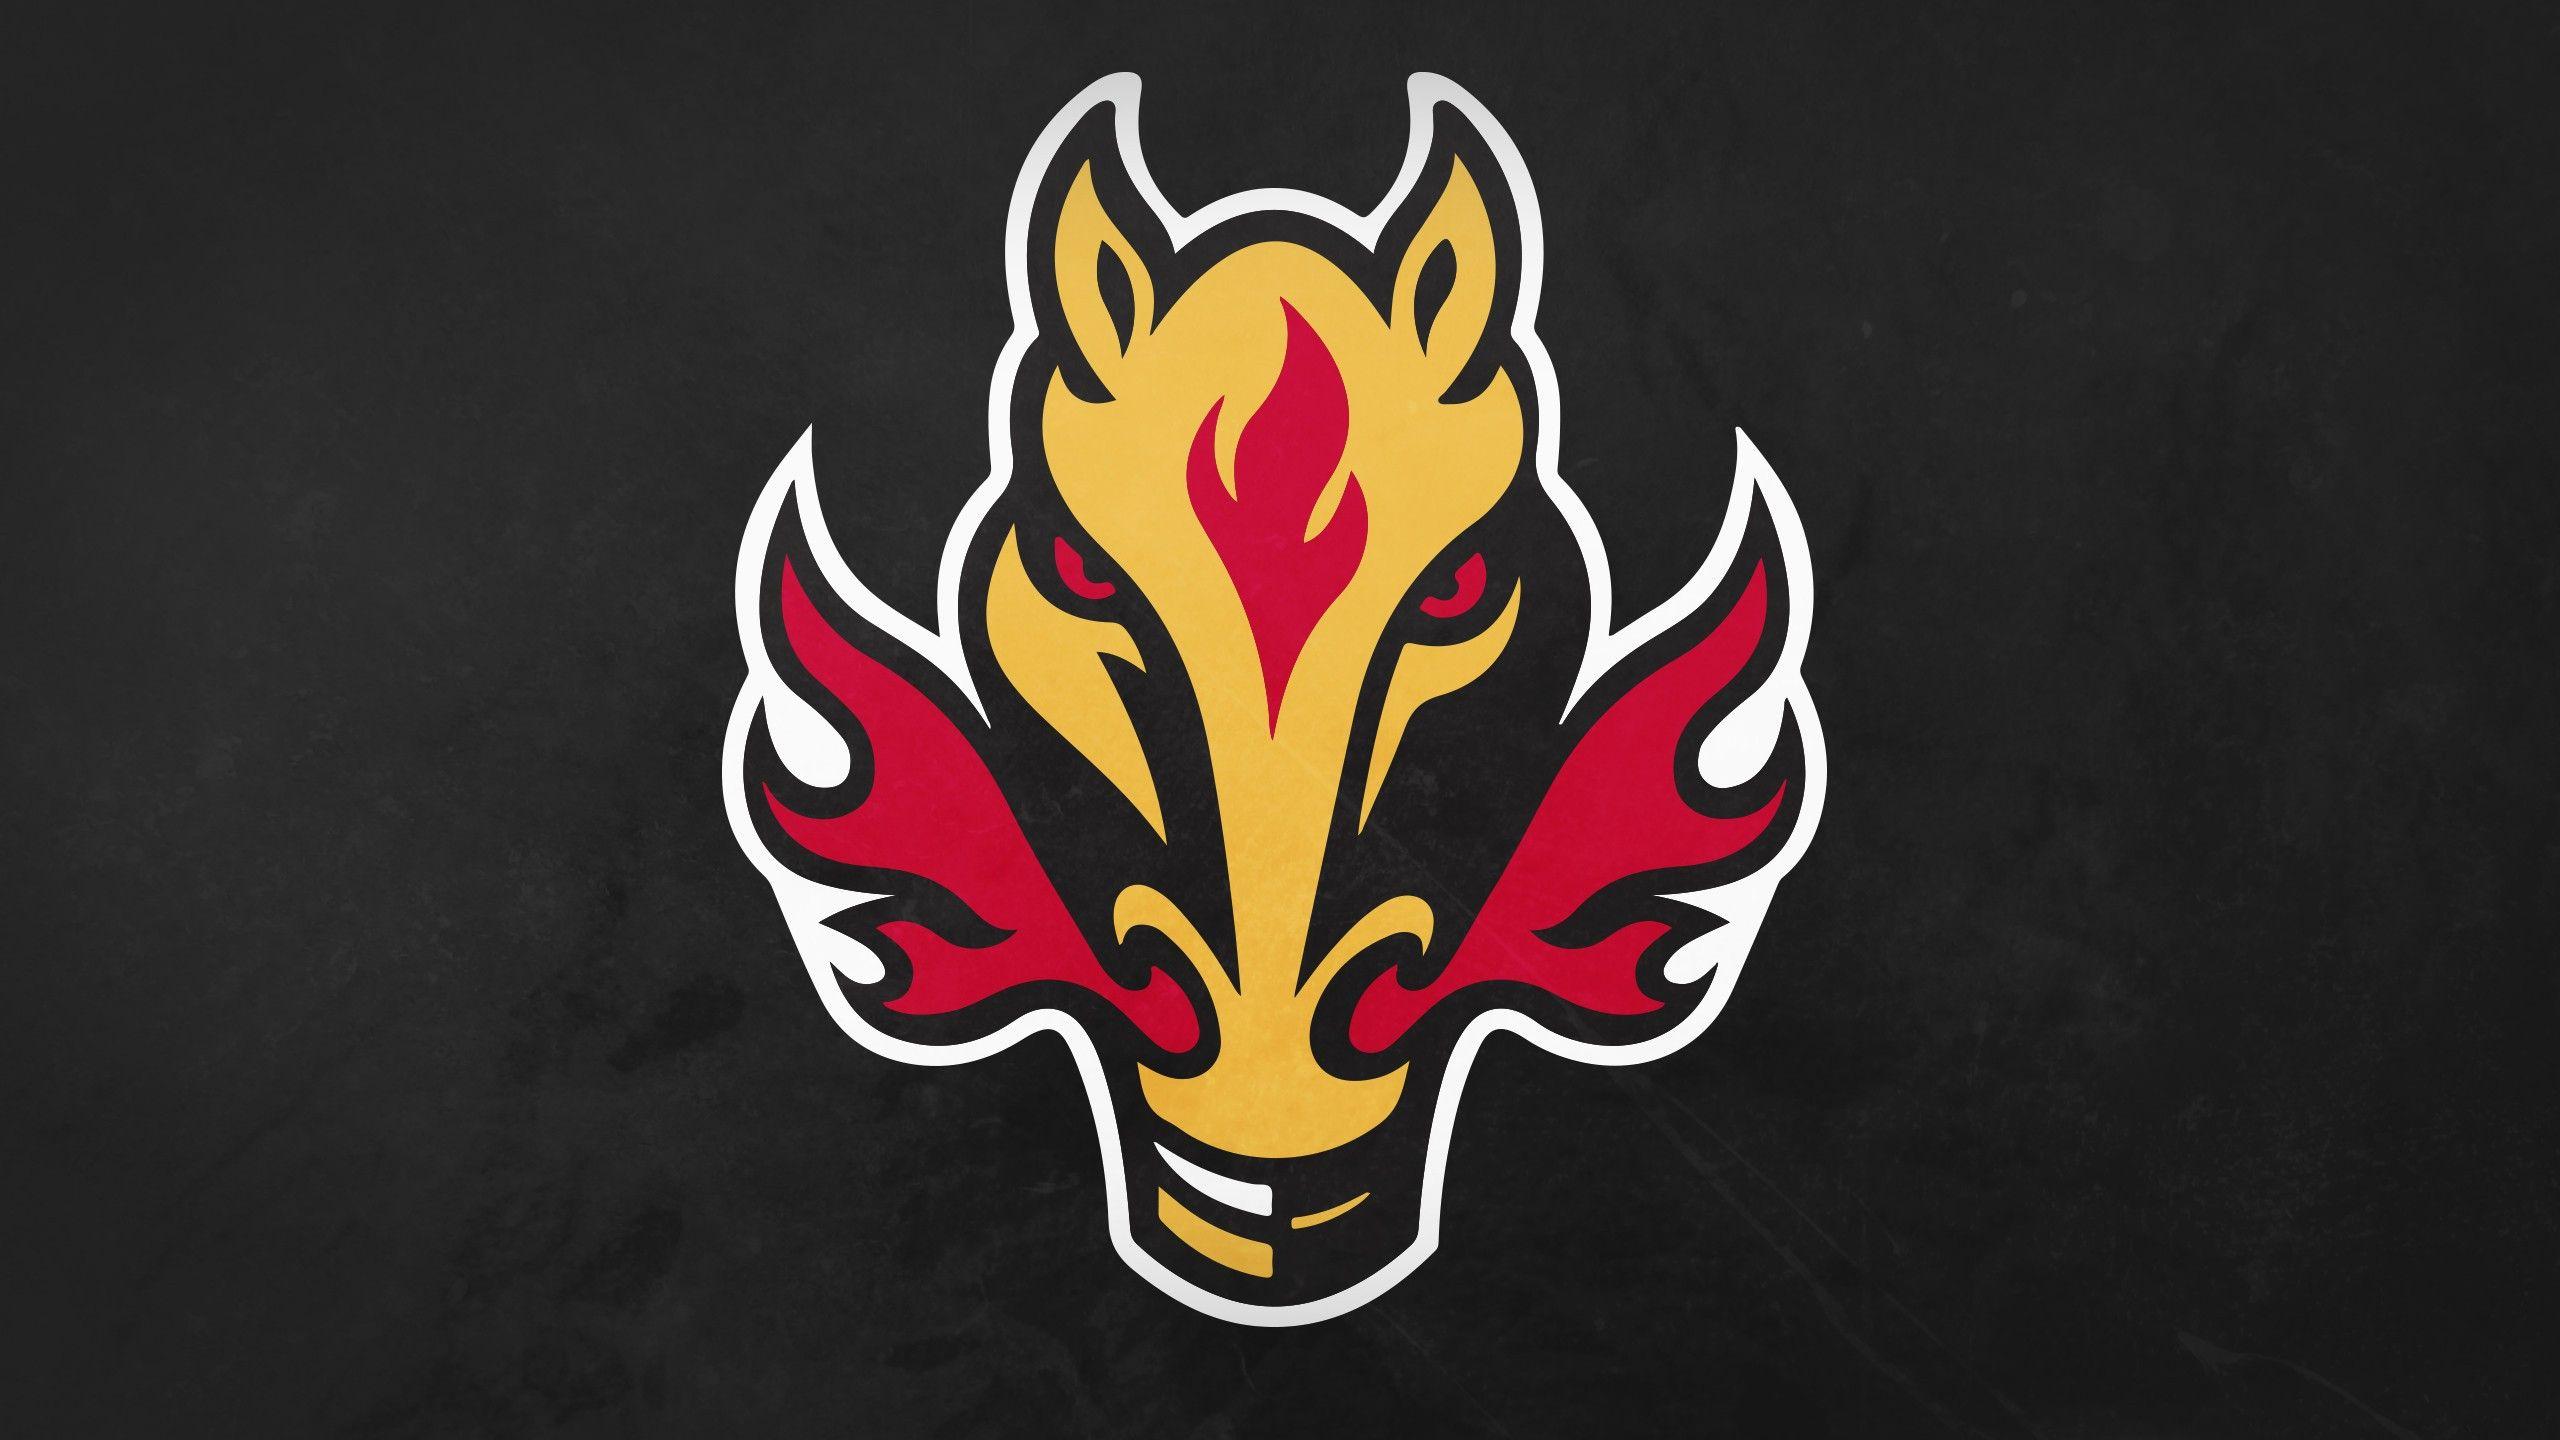 NHL Calgary Flames Logo Black wallpaper HD 2016 in Hockey